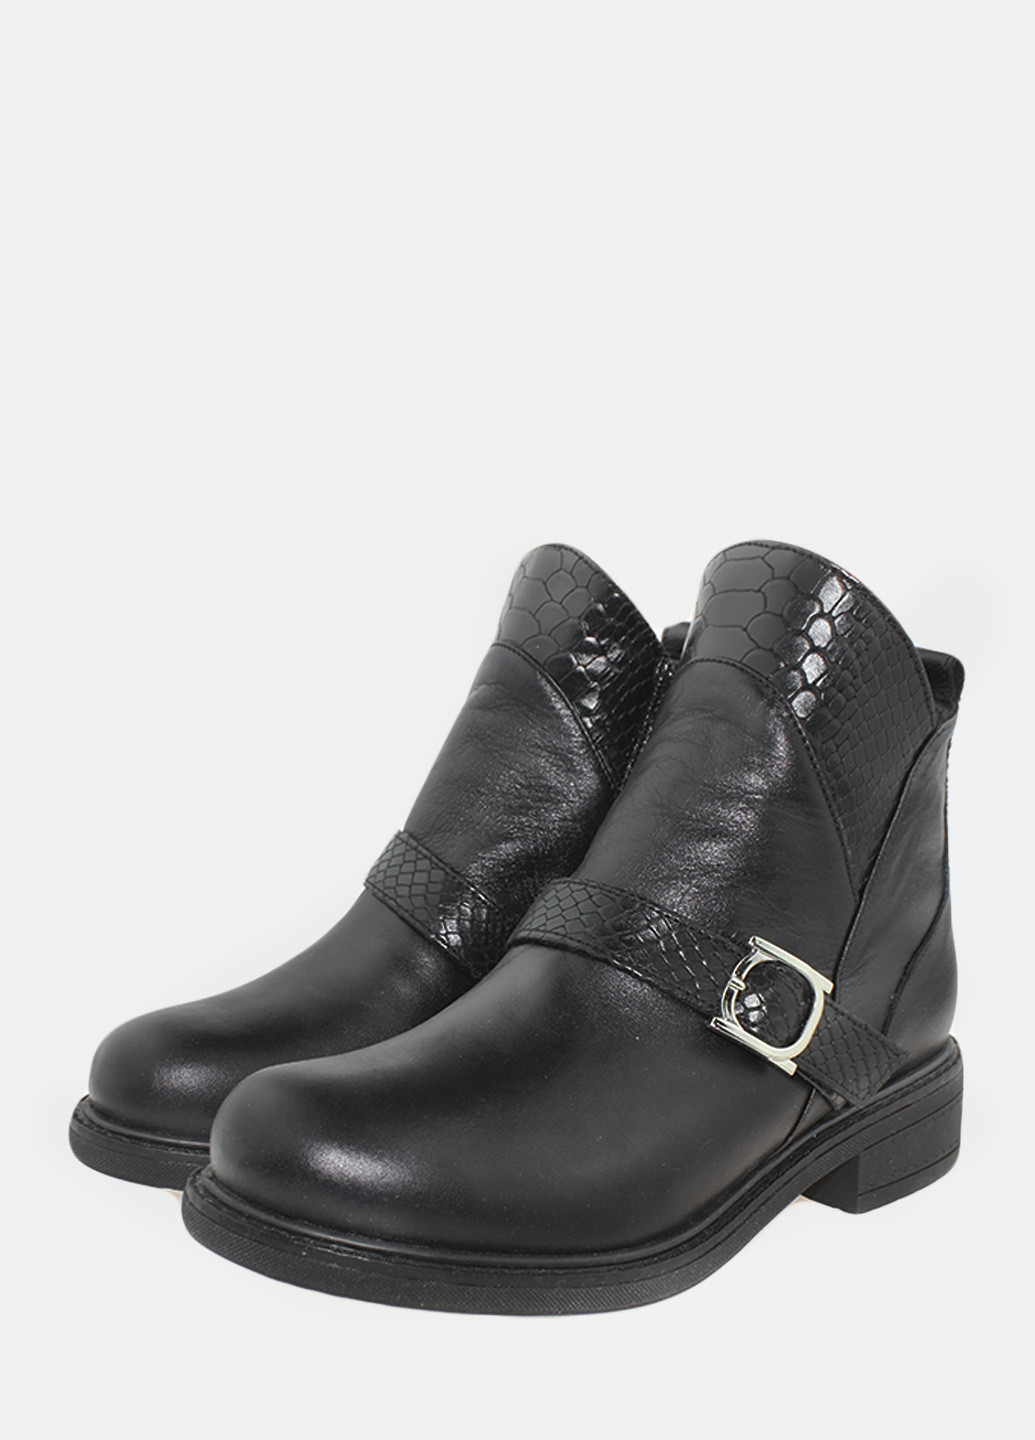 Осенние ботинки rty3911-1 черный Tiffany